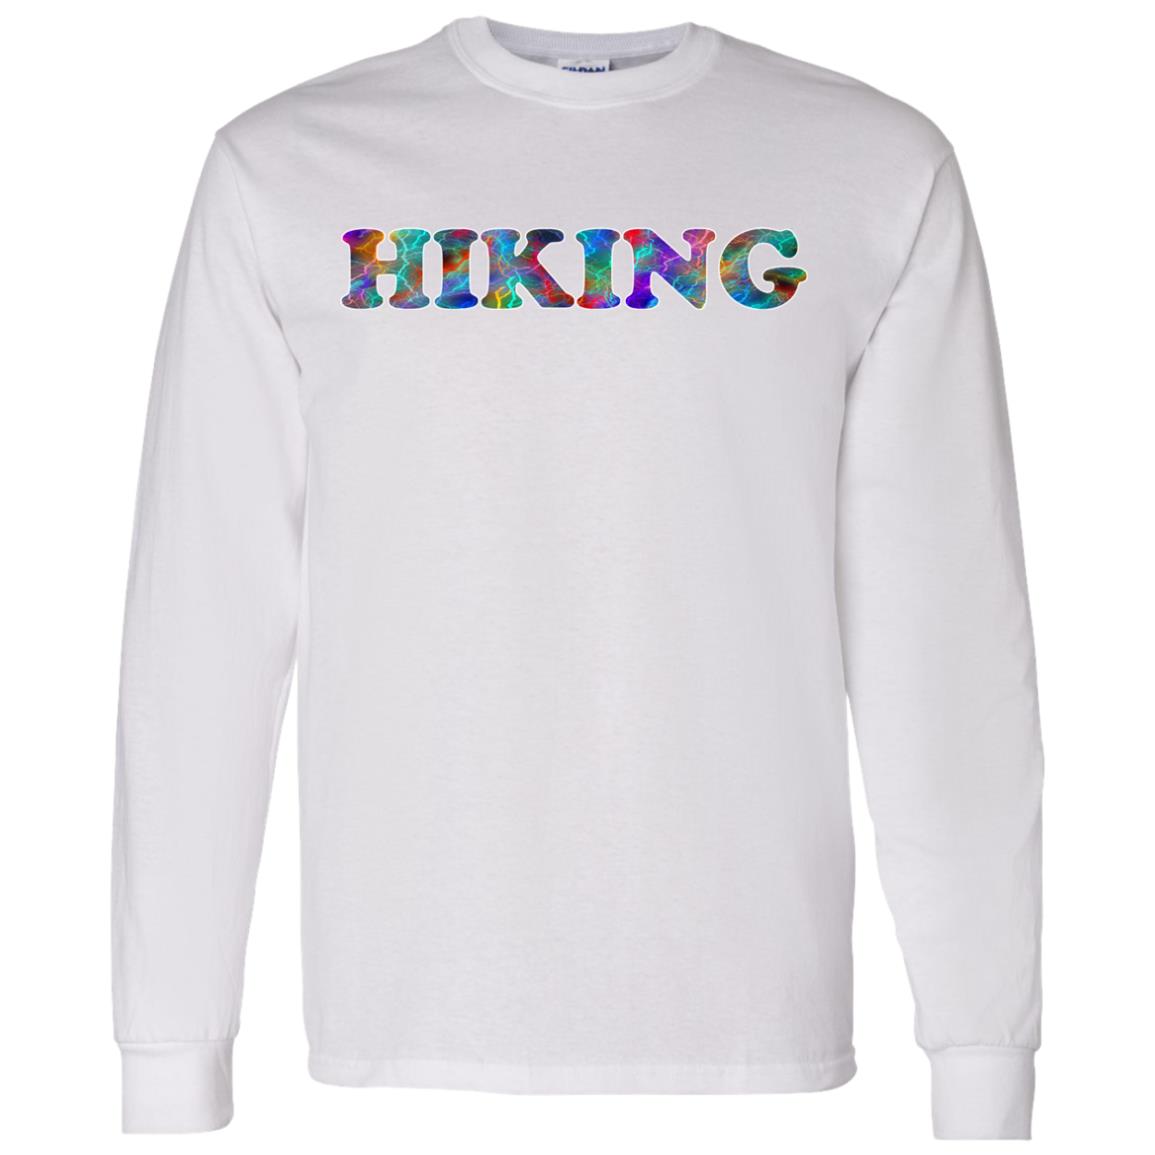 Hiking Long Sleeve Sport T-Shirt